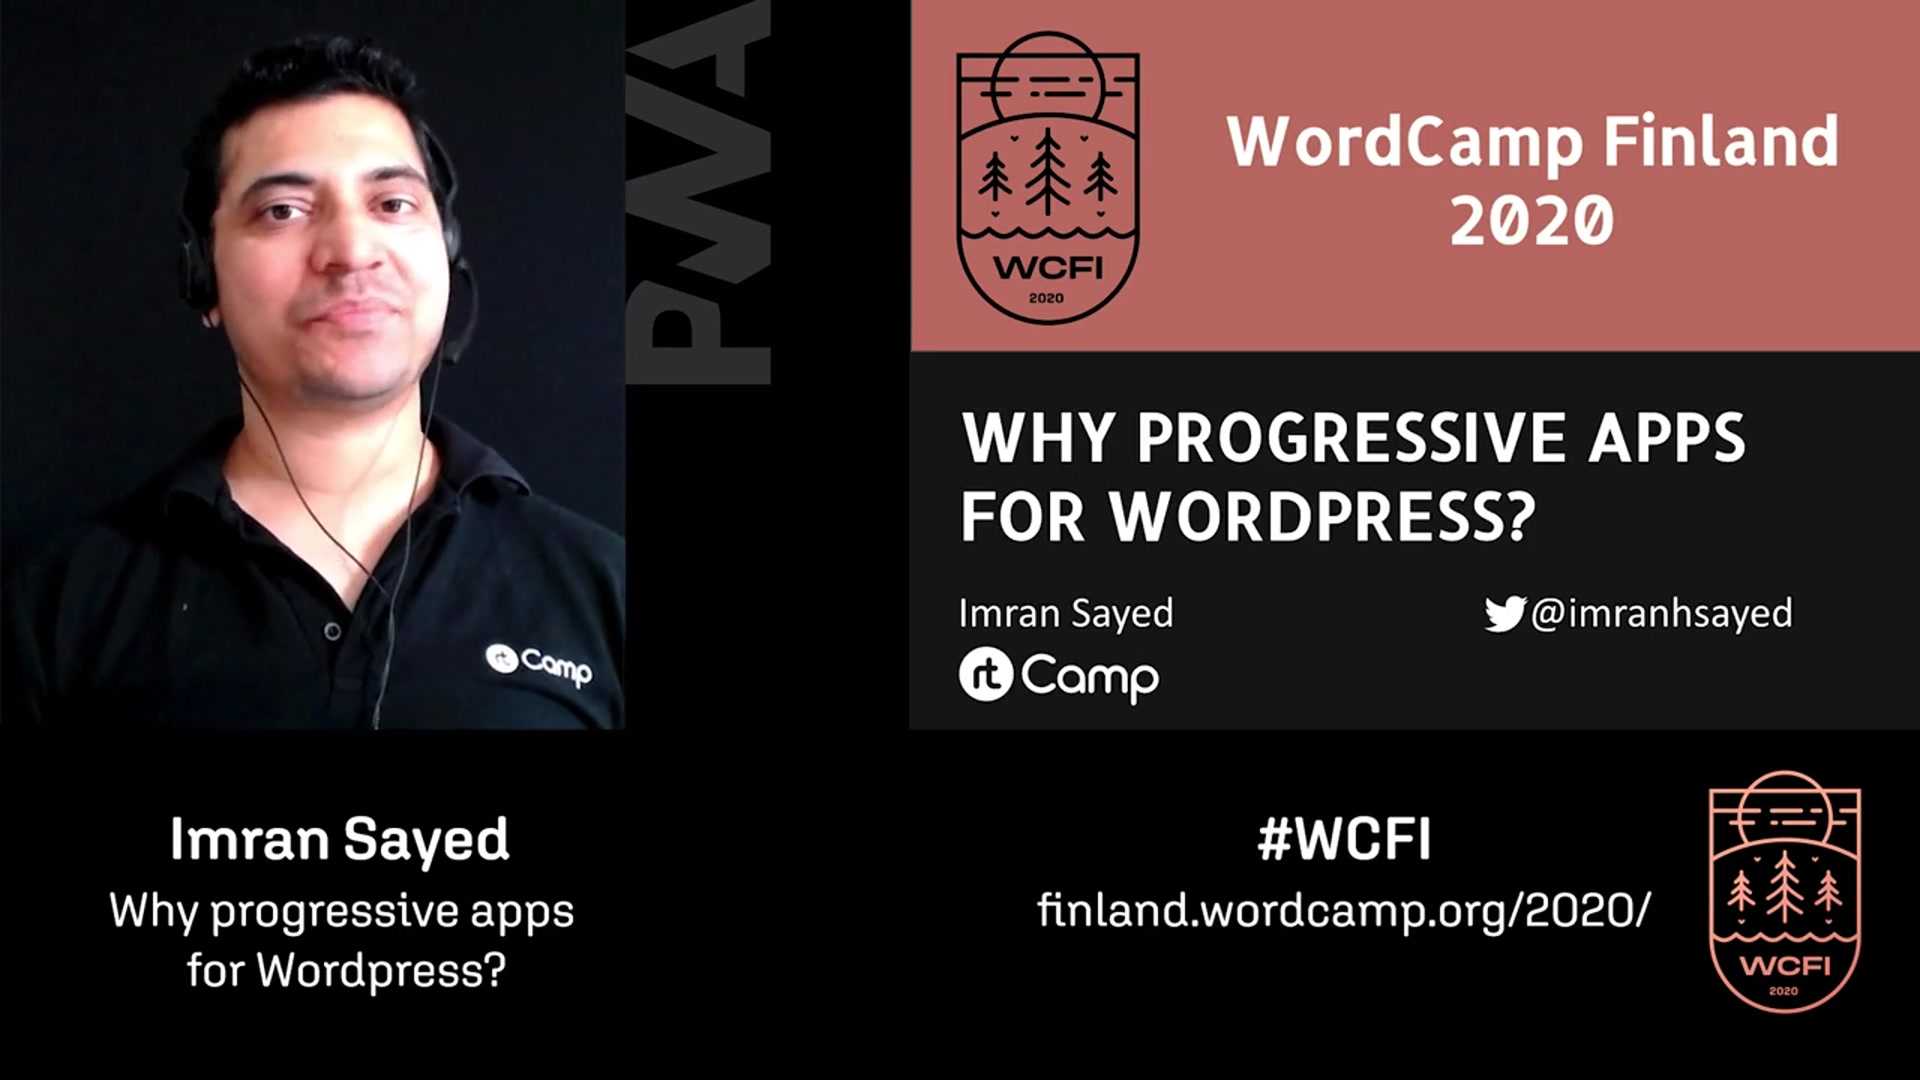 Imran Sayed: Why Progressive Web Apps for WordPress?